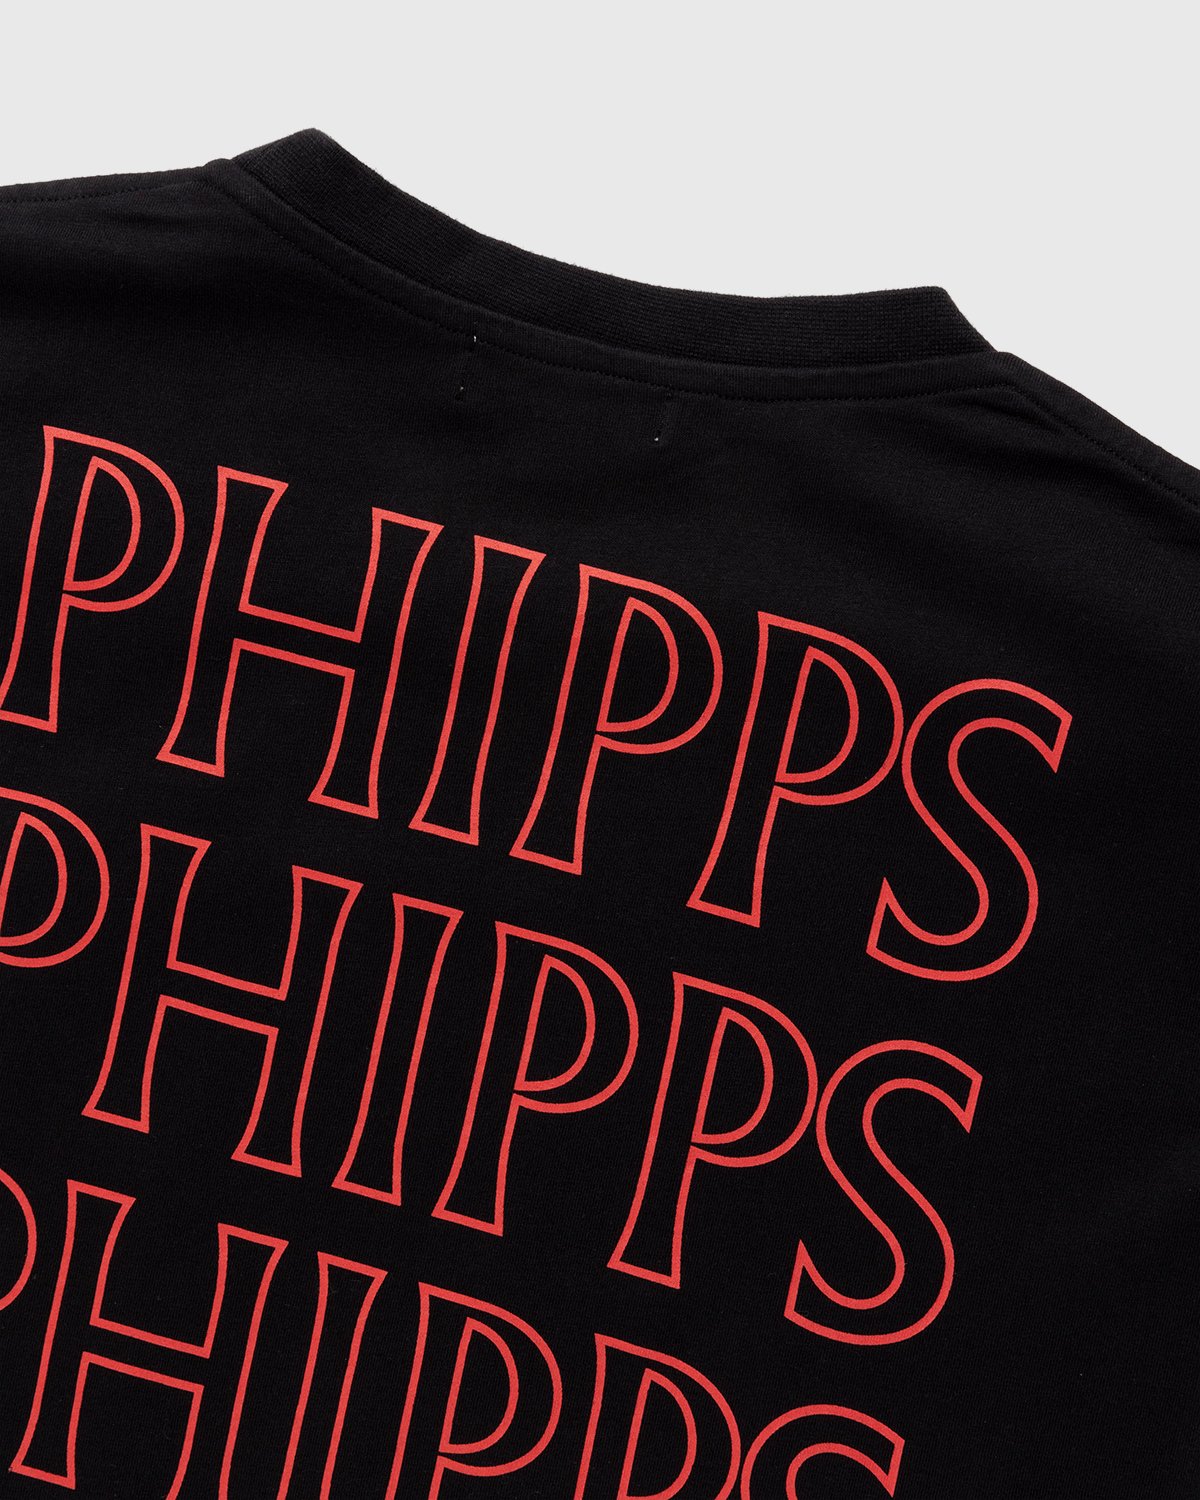 Phipps - Smiley T-Shirt Black - Clothing - Black - Image 3